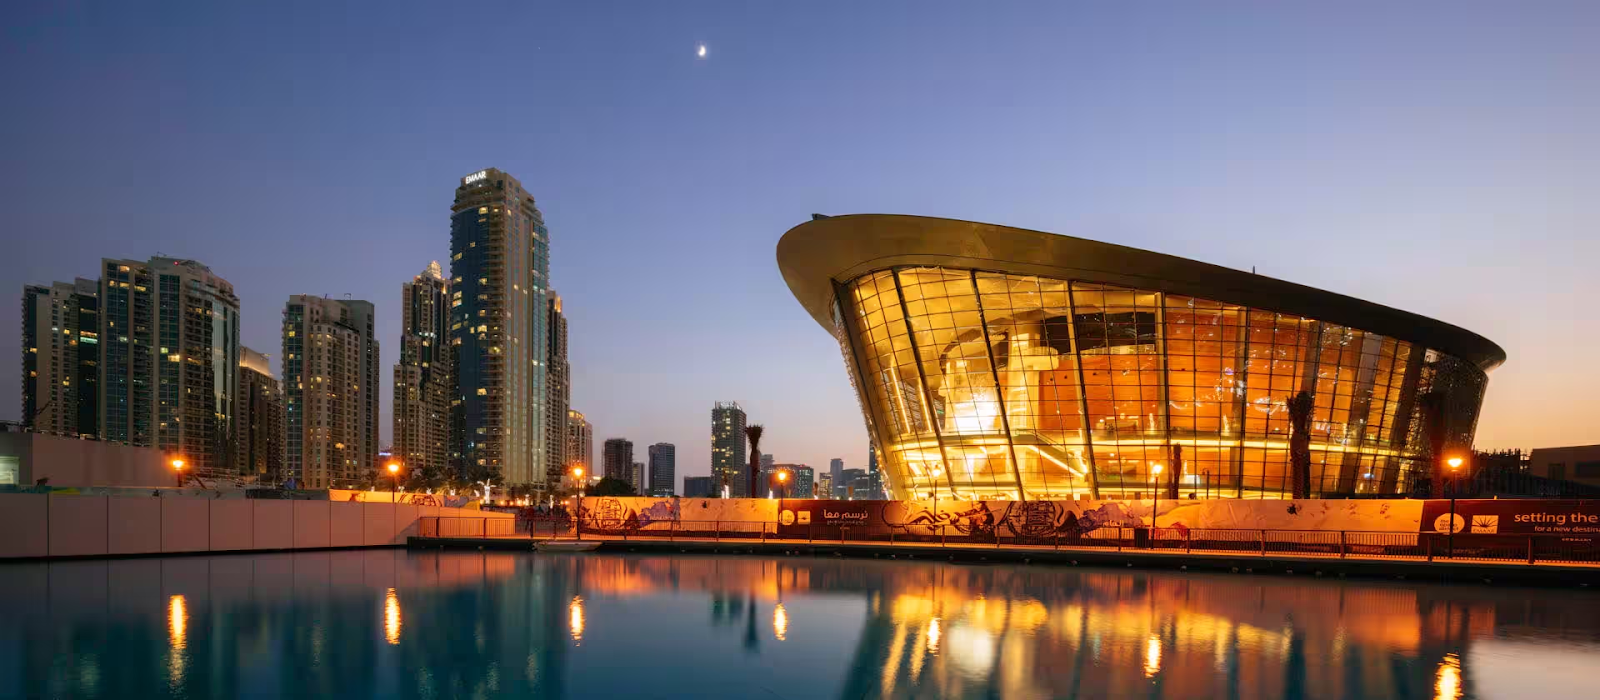 Dubai Opera House for a new year in Dubai